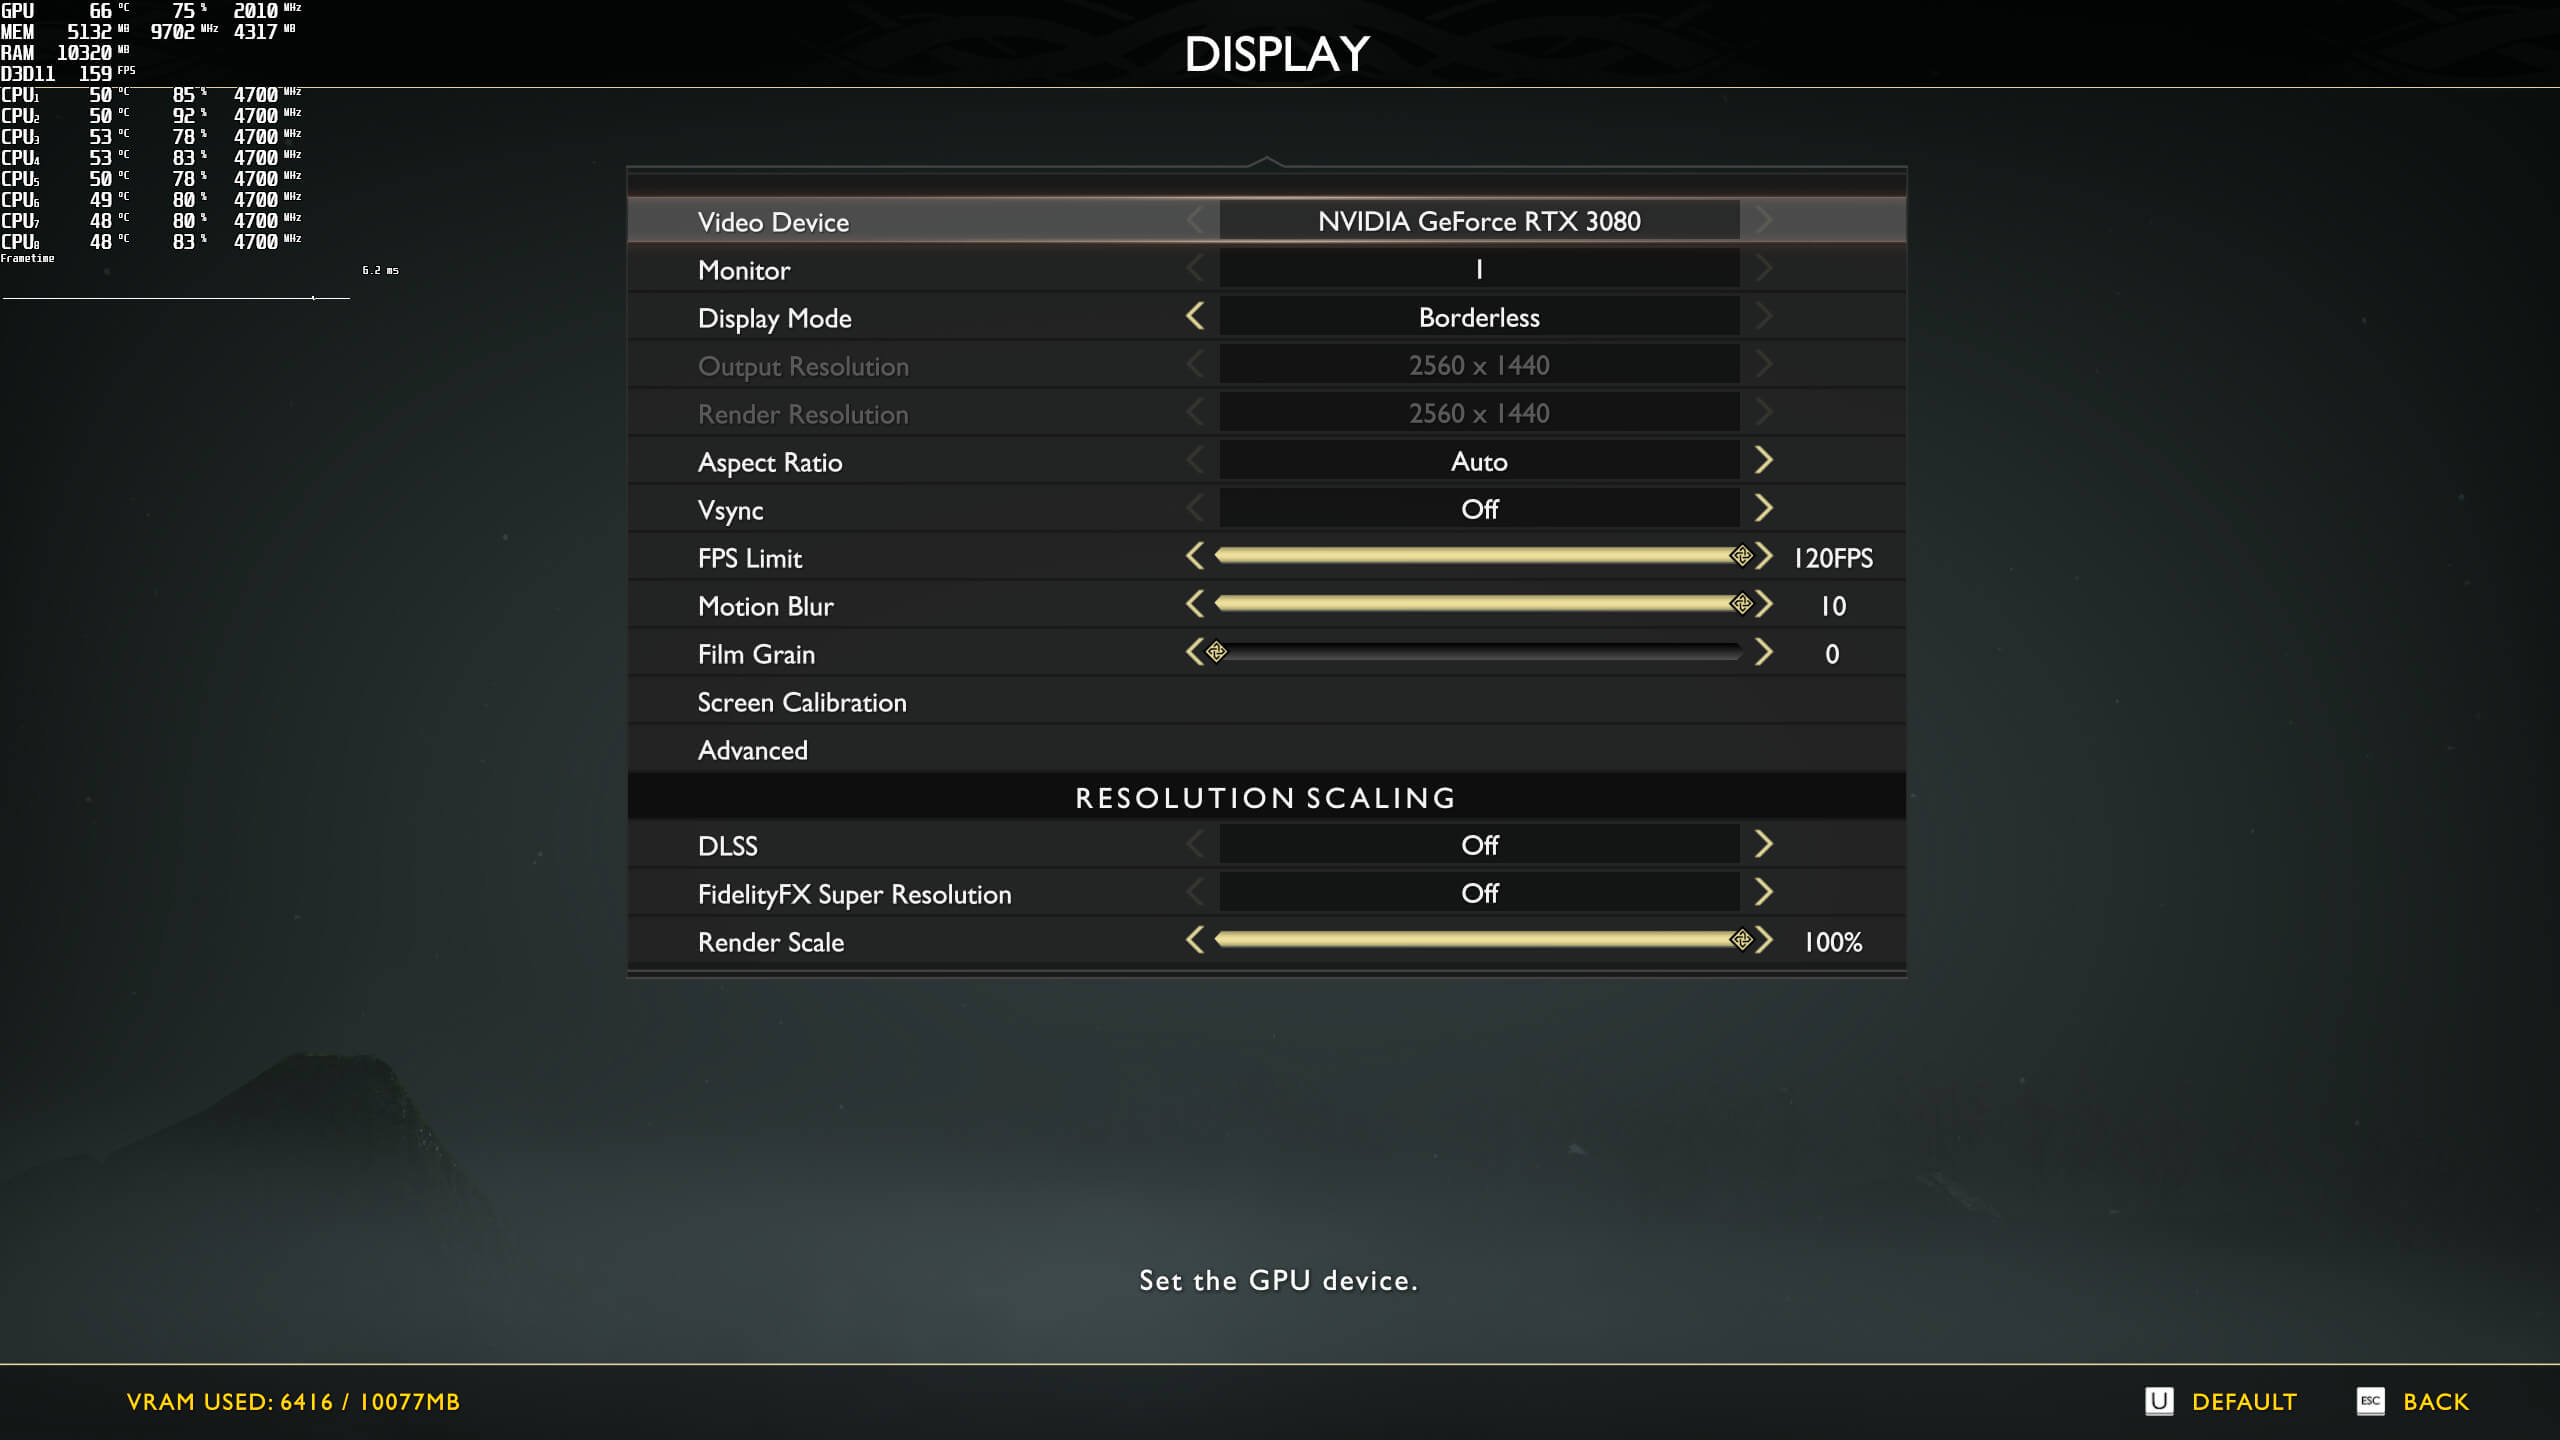 God of War PC RTX 3080 vs PS5 4K 60 FPS Graphics Comparison 